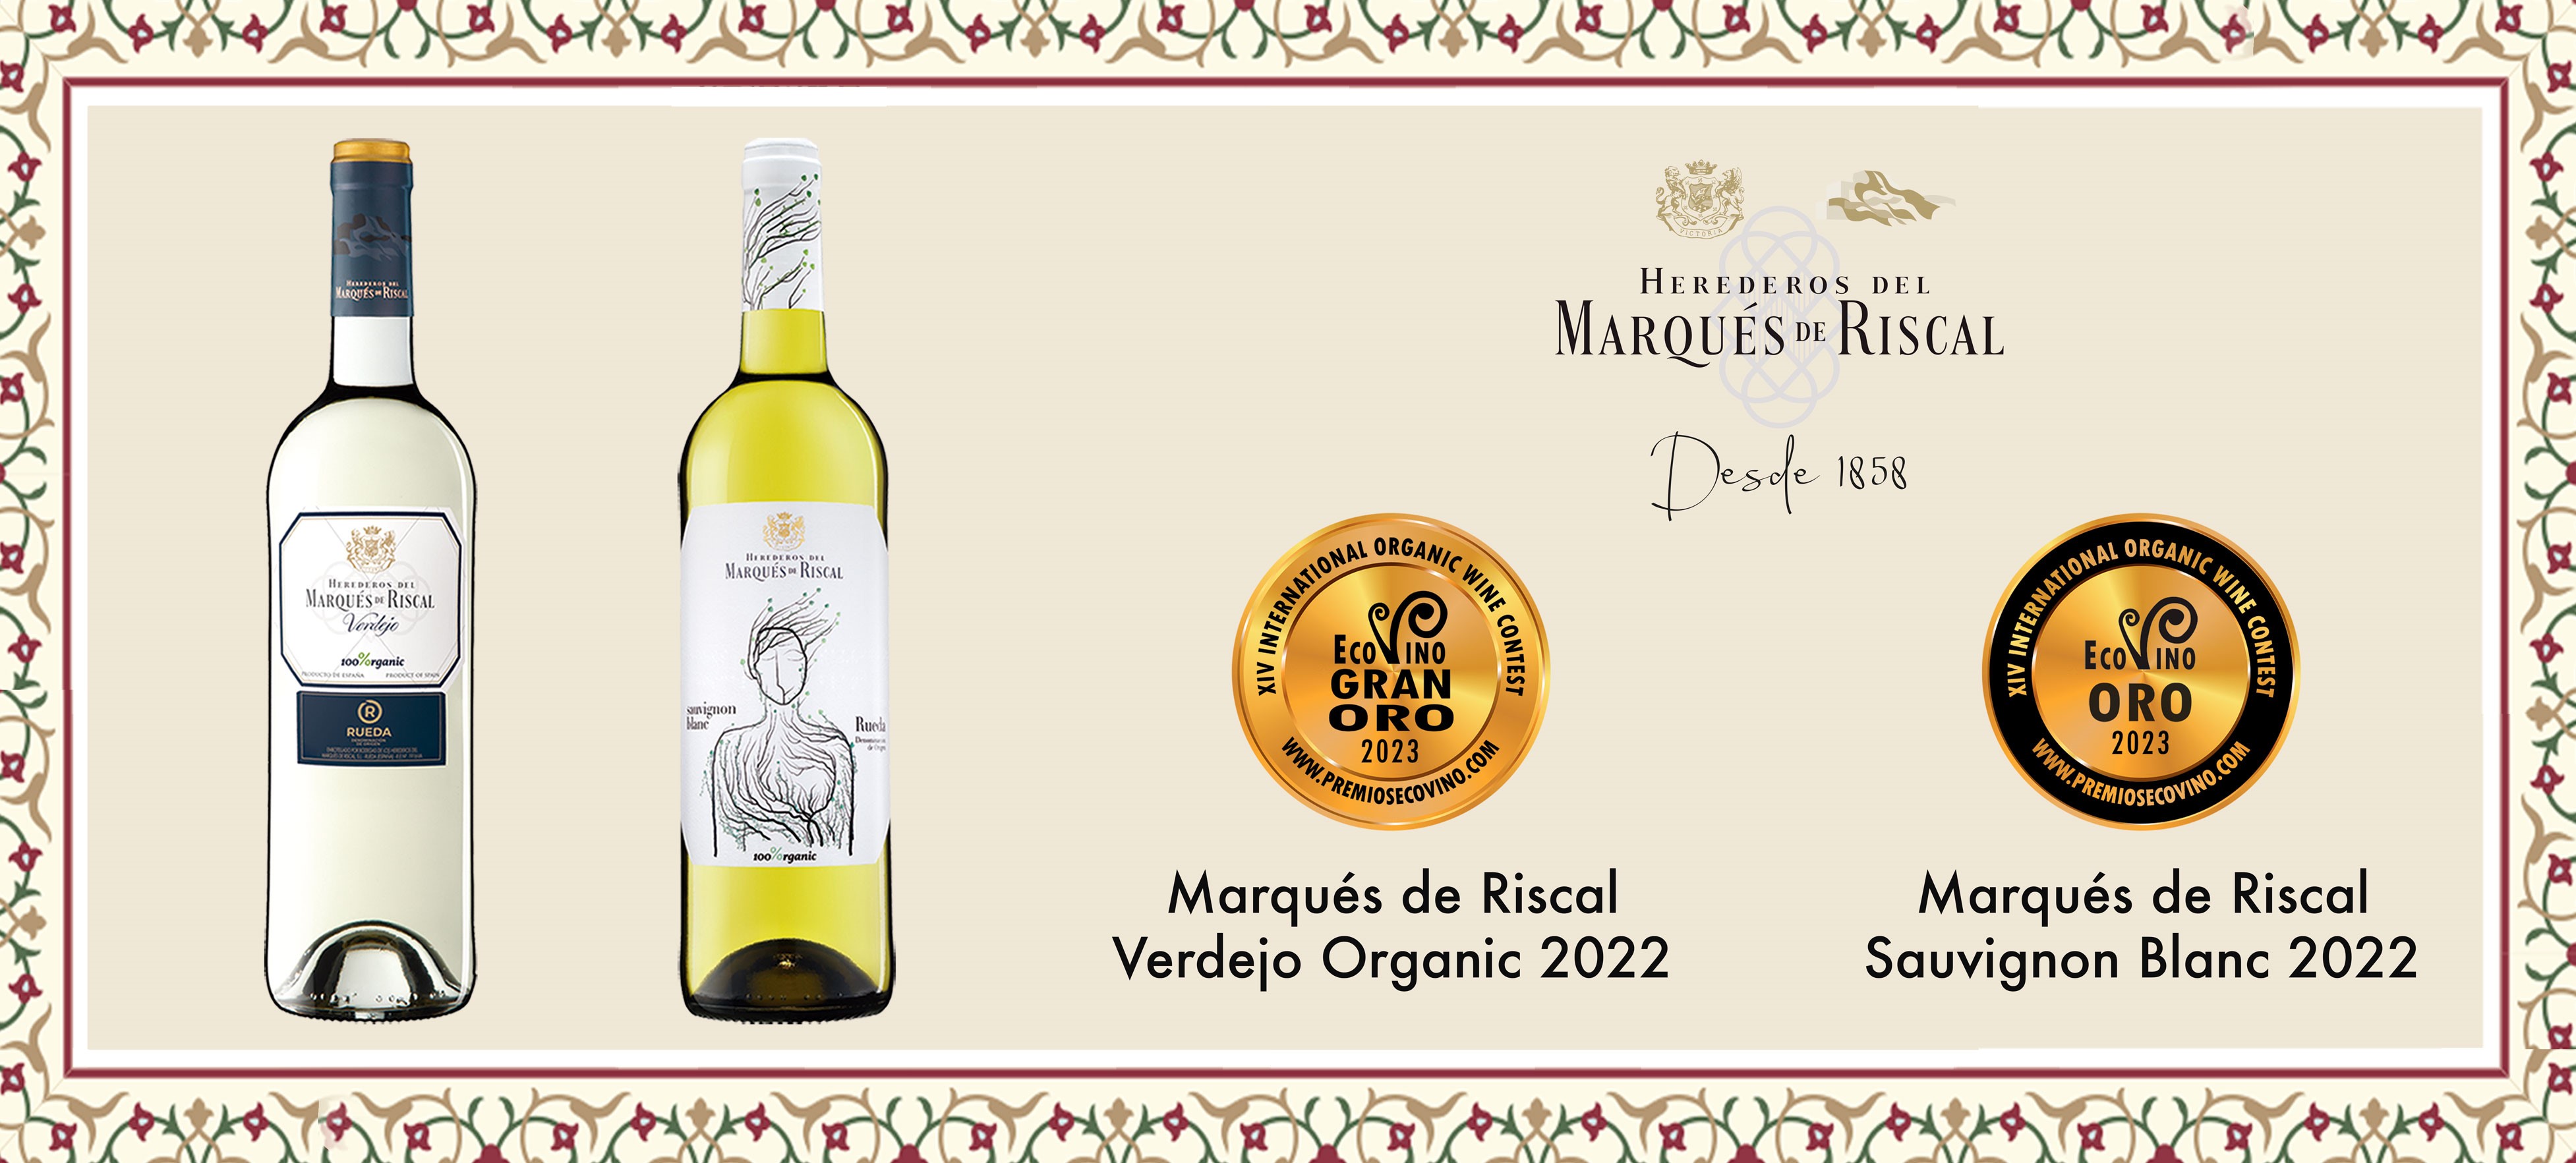 Success for Marqués de Riscal Verdejo Organic in the 2023 Ecovino Awards  